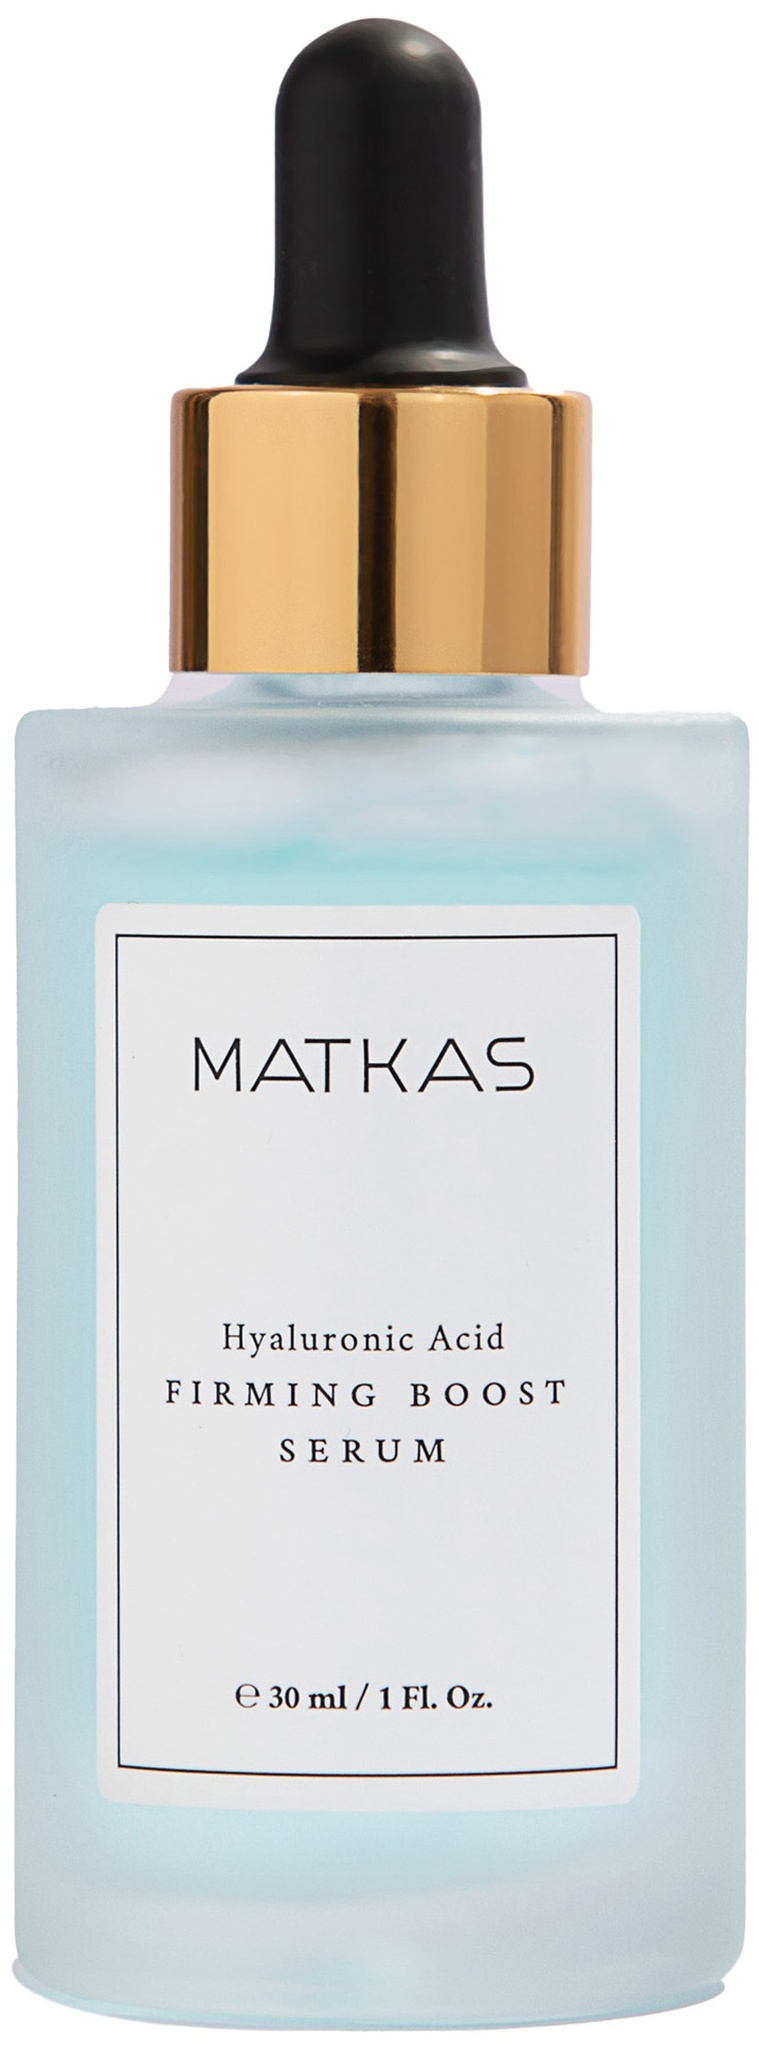 MATKAS Hyaluronic Acid Firming Boost Serum